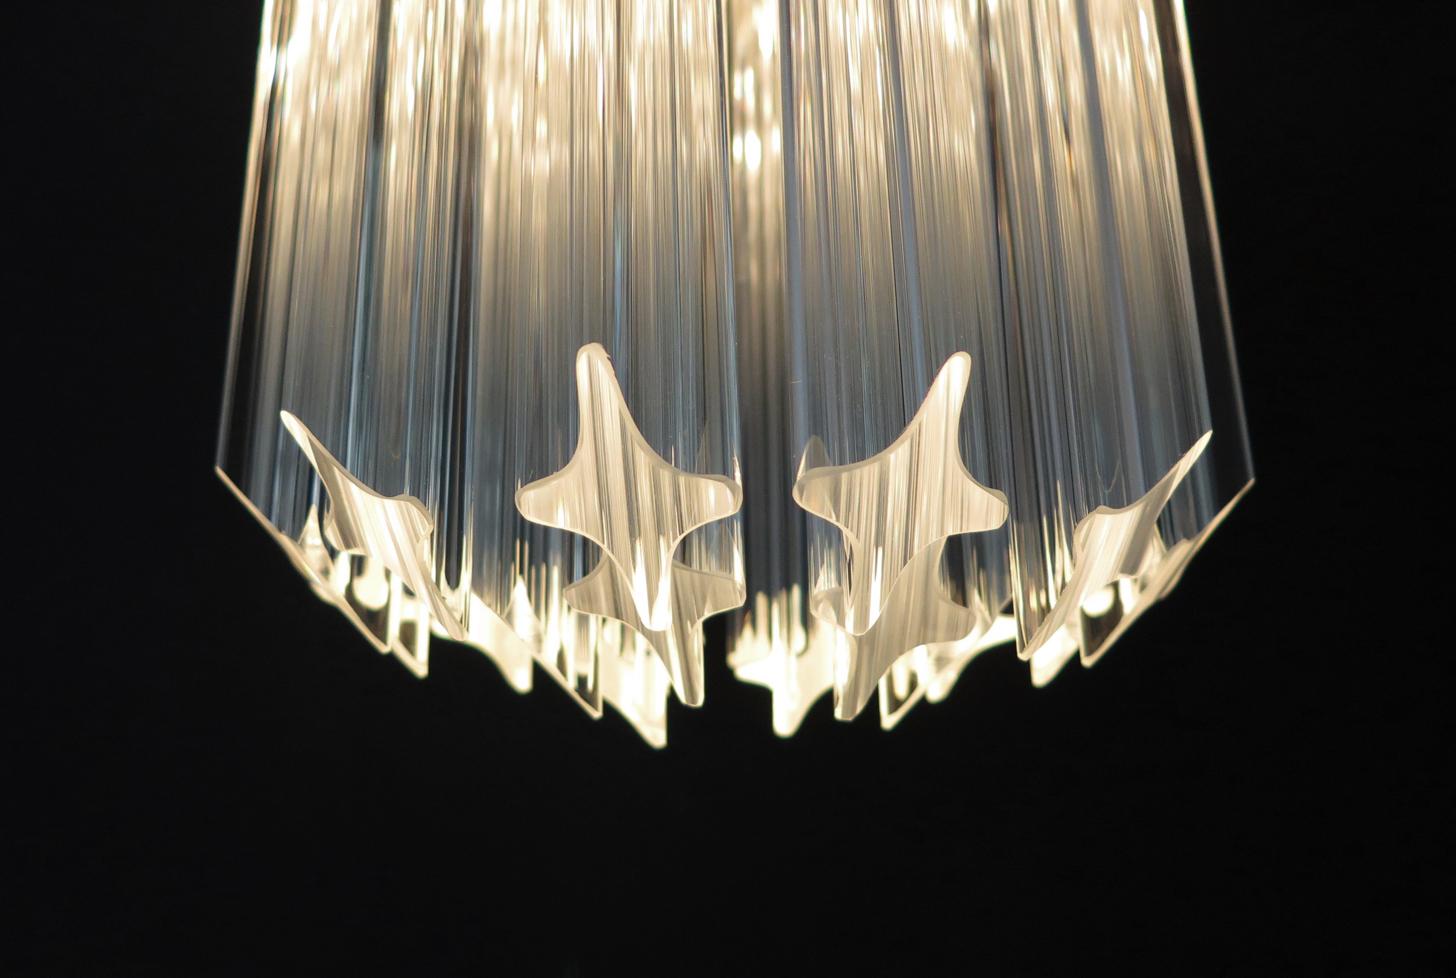 Glass Murano quadriedri chandelier - 46 trasparent prism